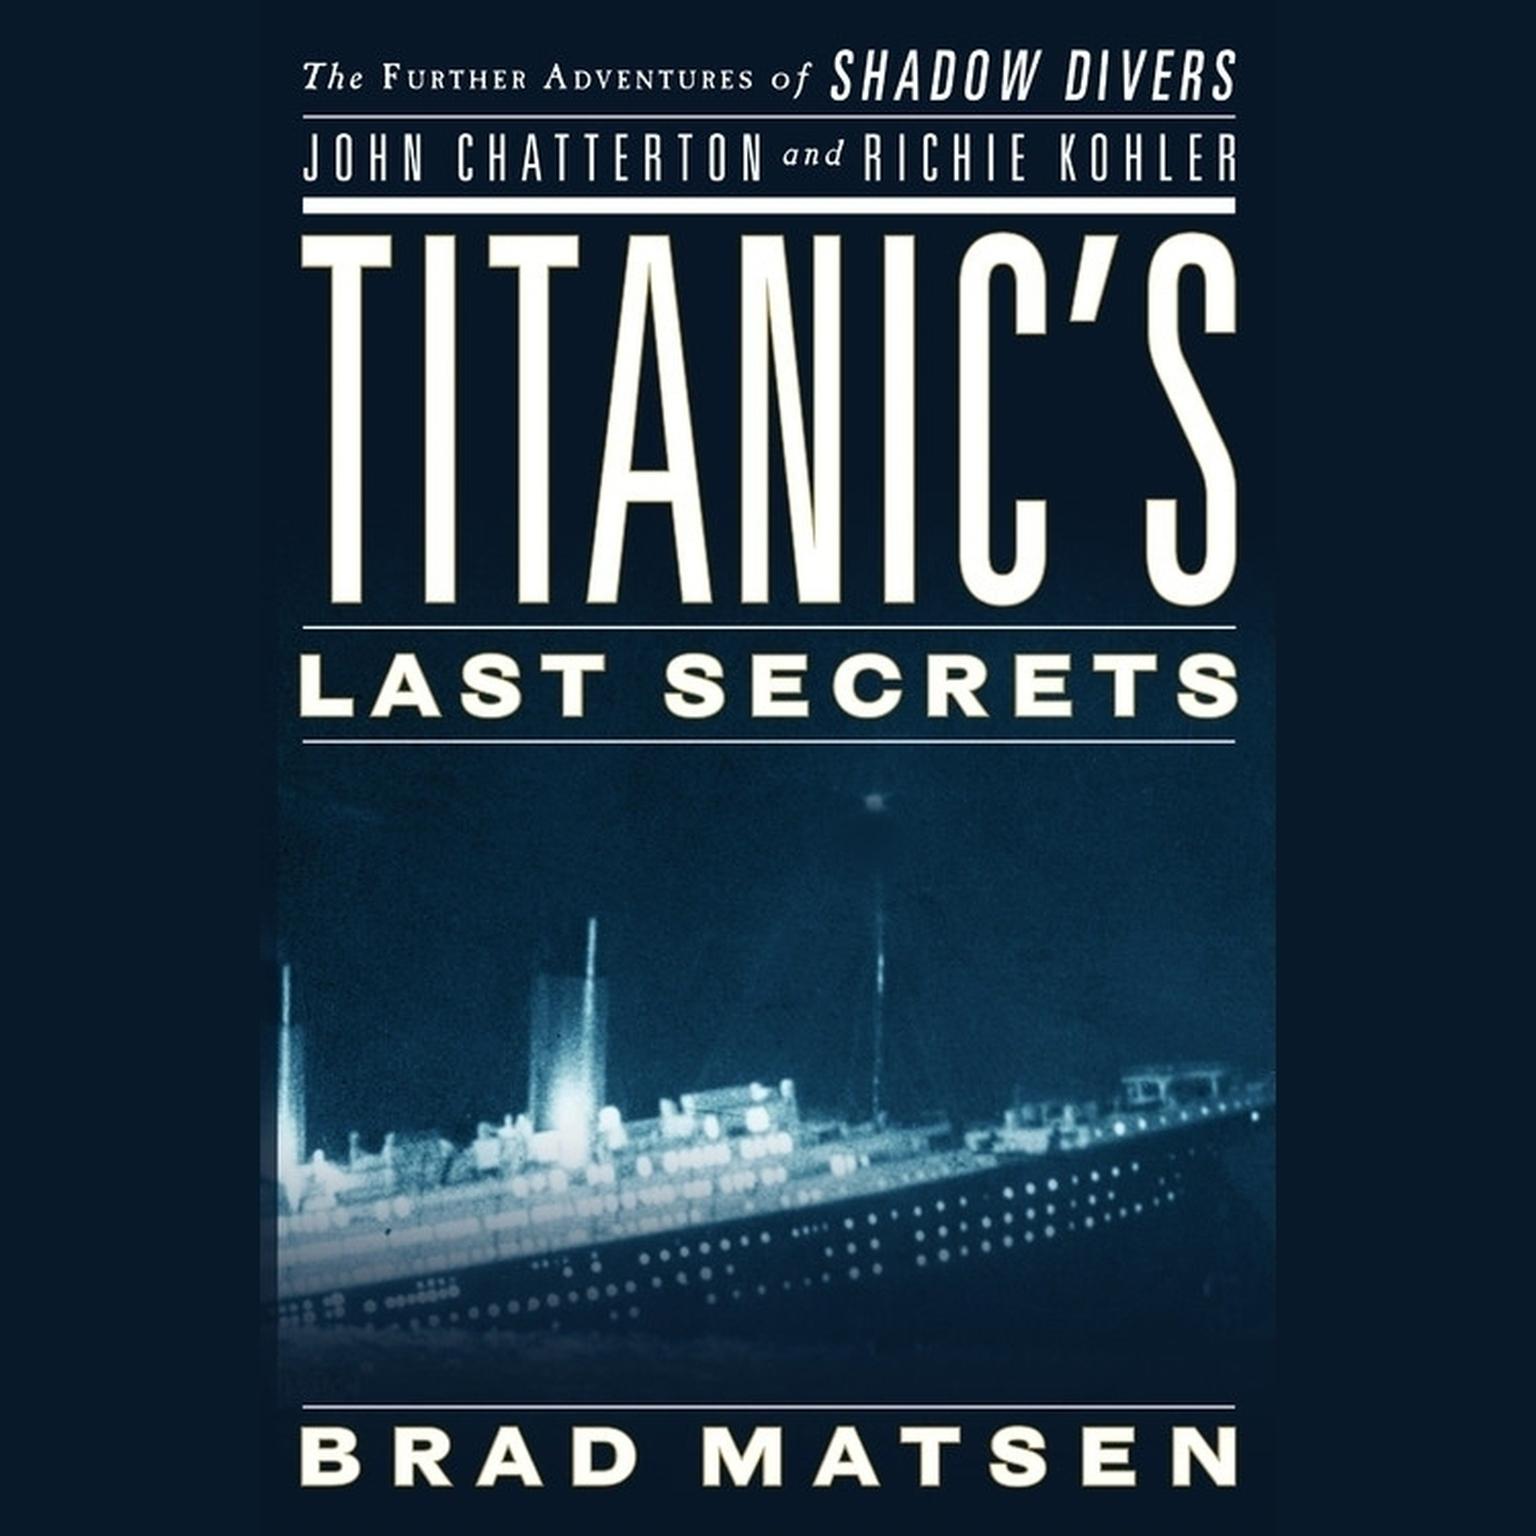 Titanics Last Secrets (Abridged): The Further Adventures of Shadow Divers John Chatterton and Richie Kohler Audiobook, by Brad Matsen